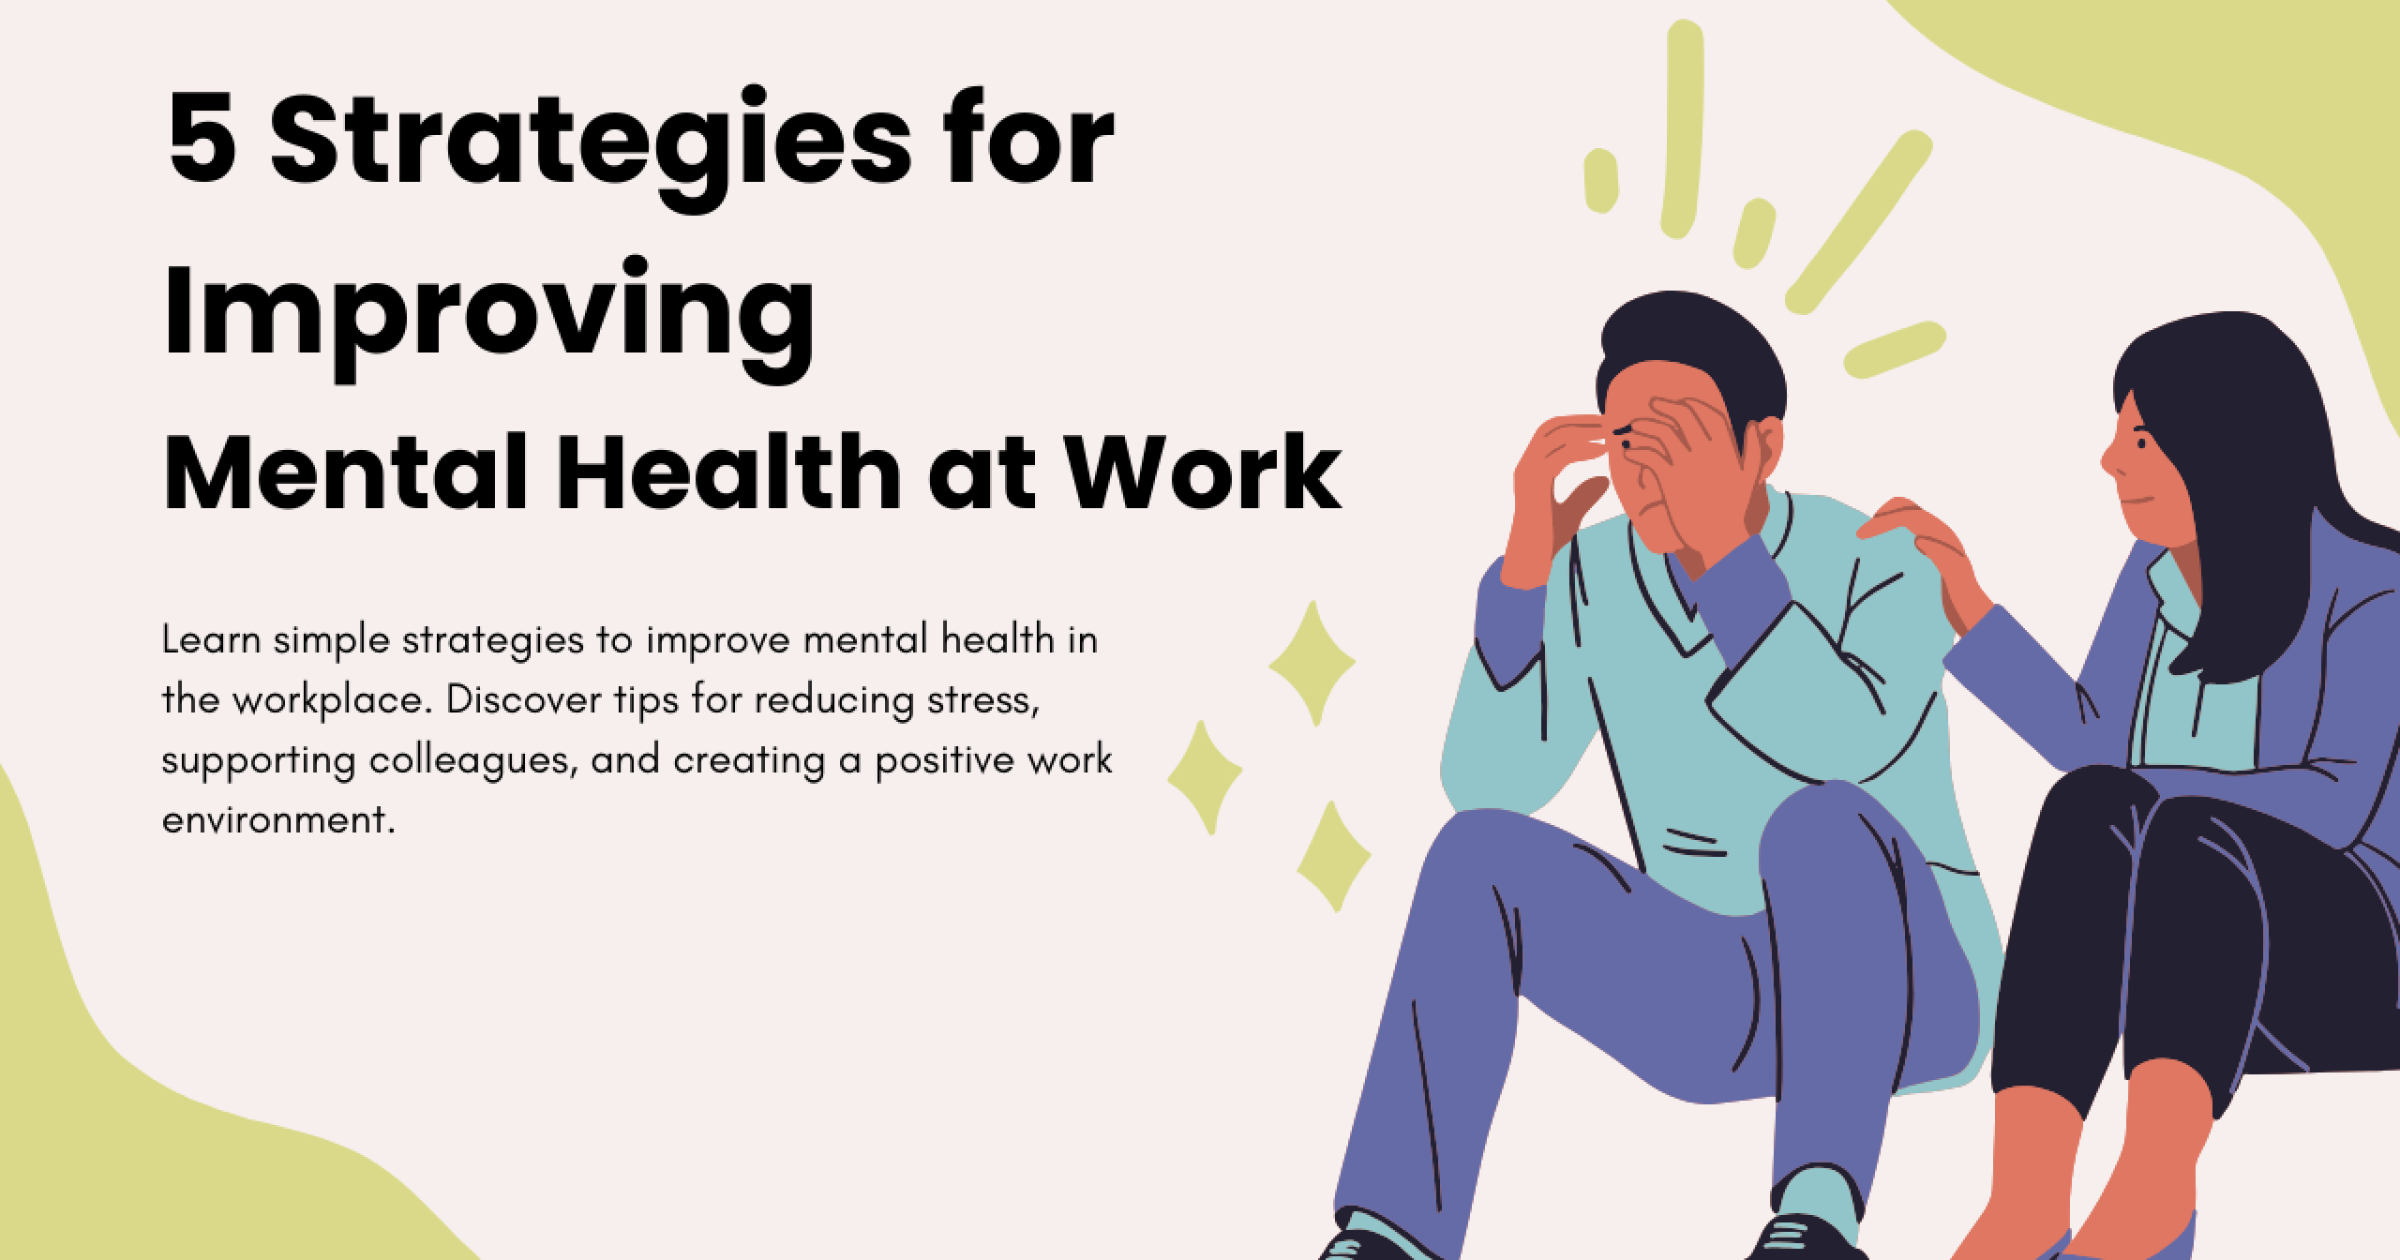 5 Strategies for Improving Mental Health at Work